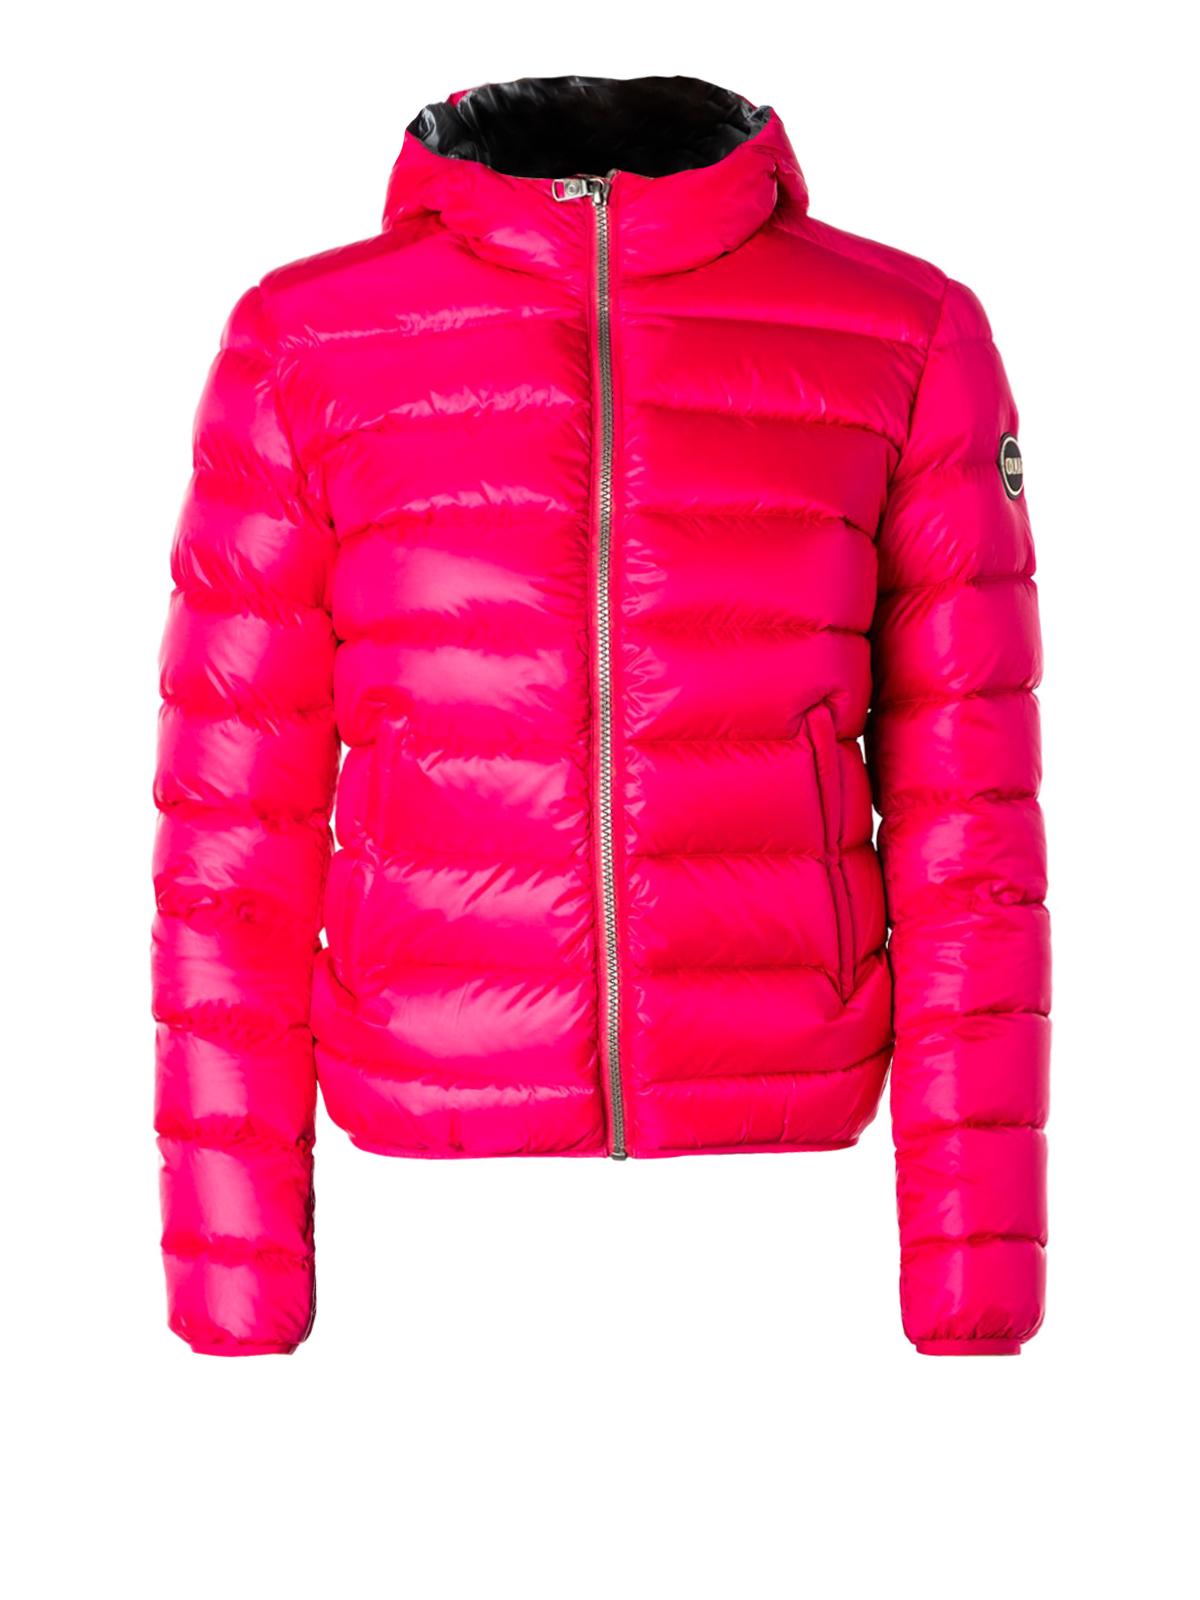 COLMAR ORIGINALS Fuchsia Hooded Puffer Jacket in Pink - Lyst